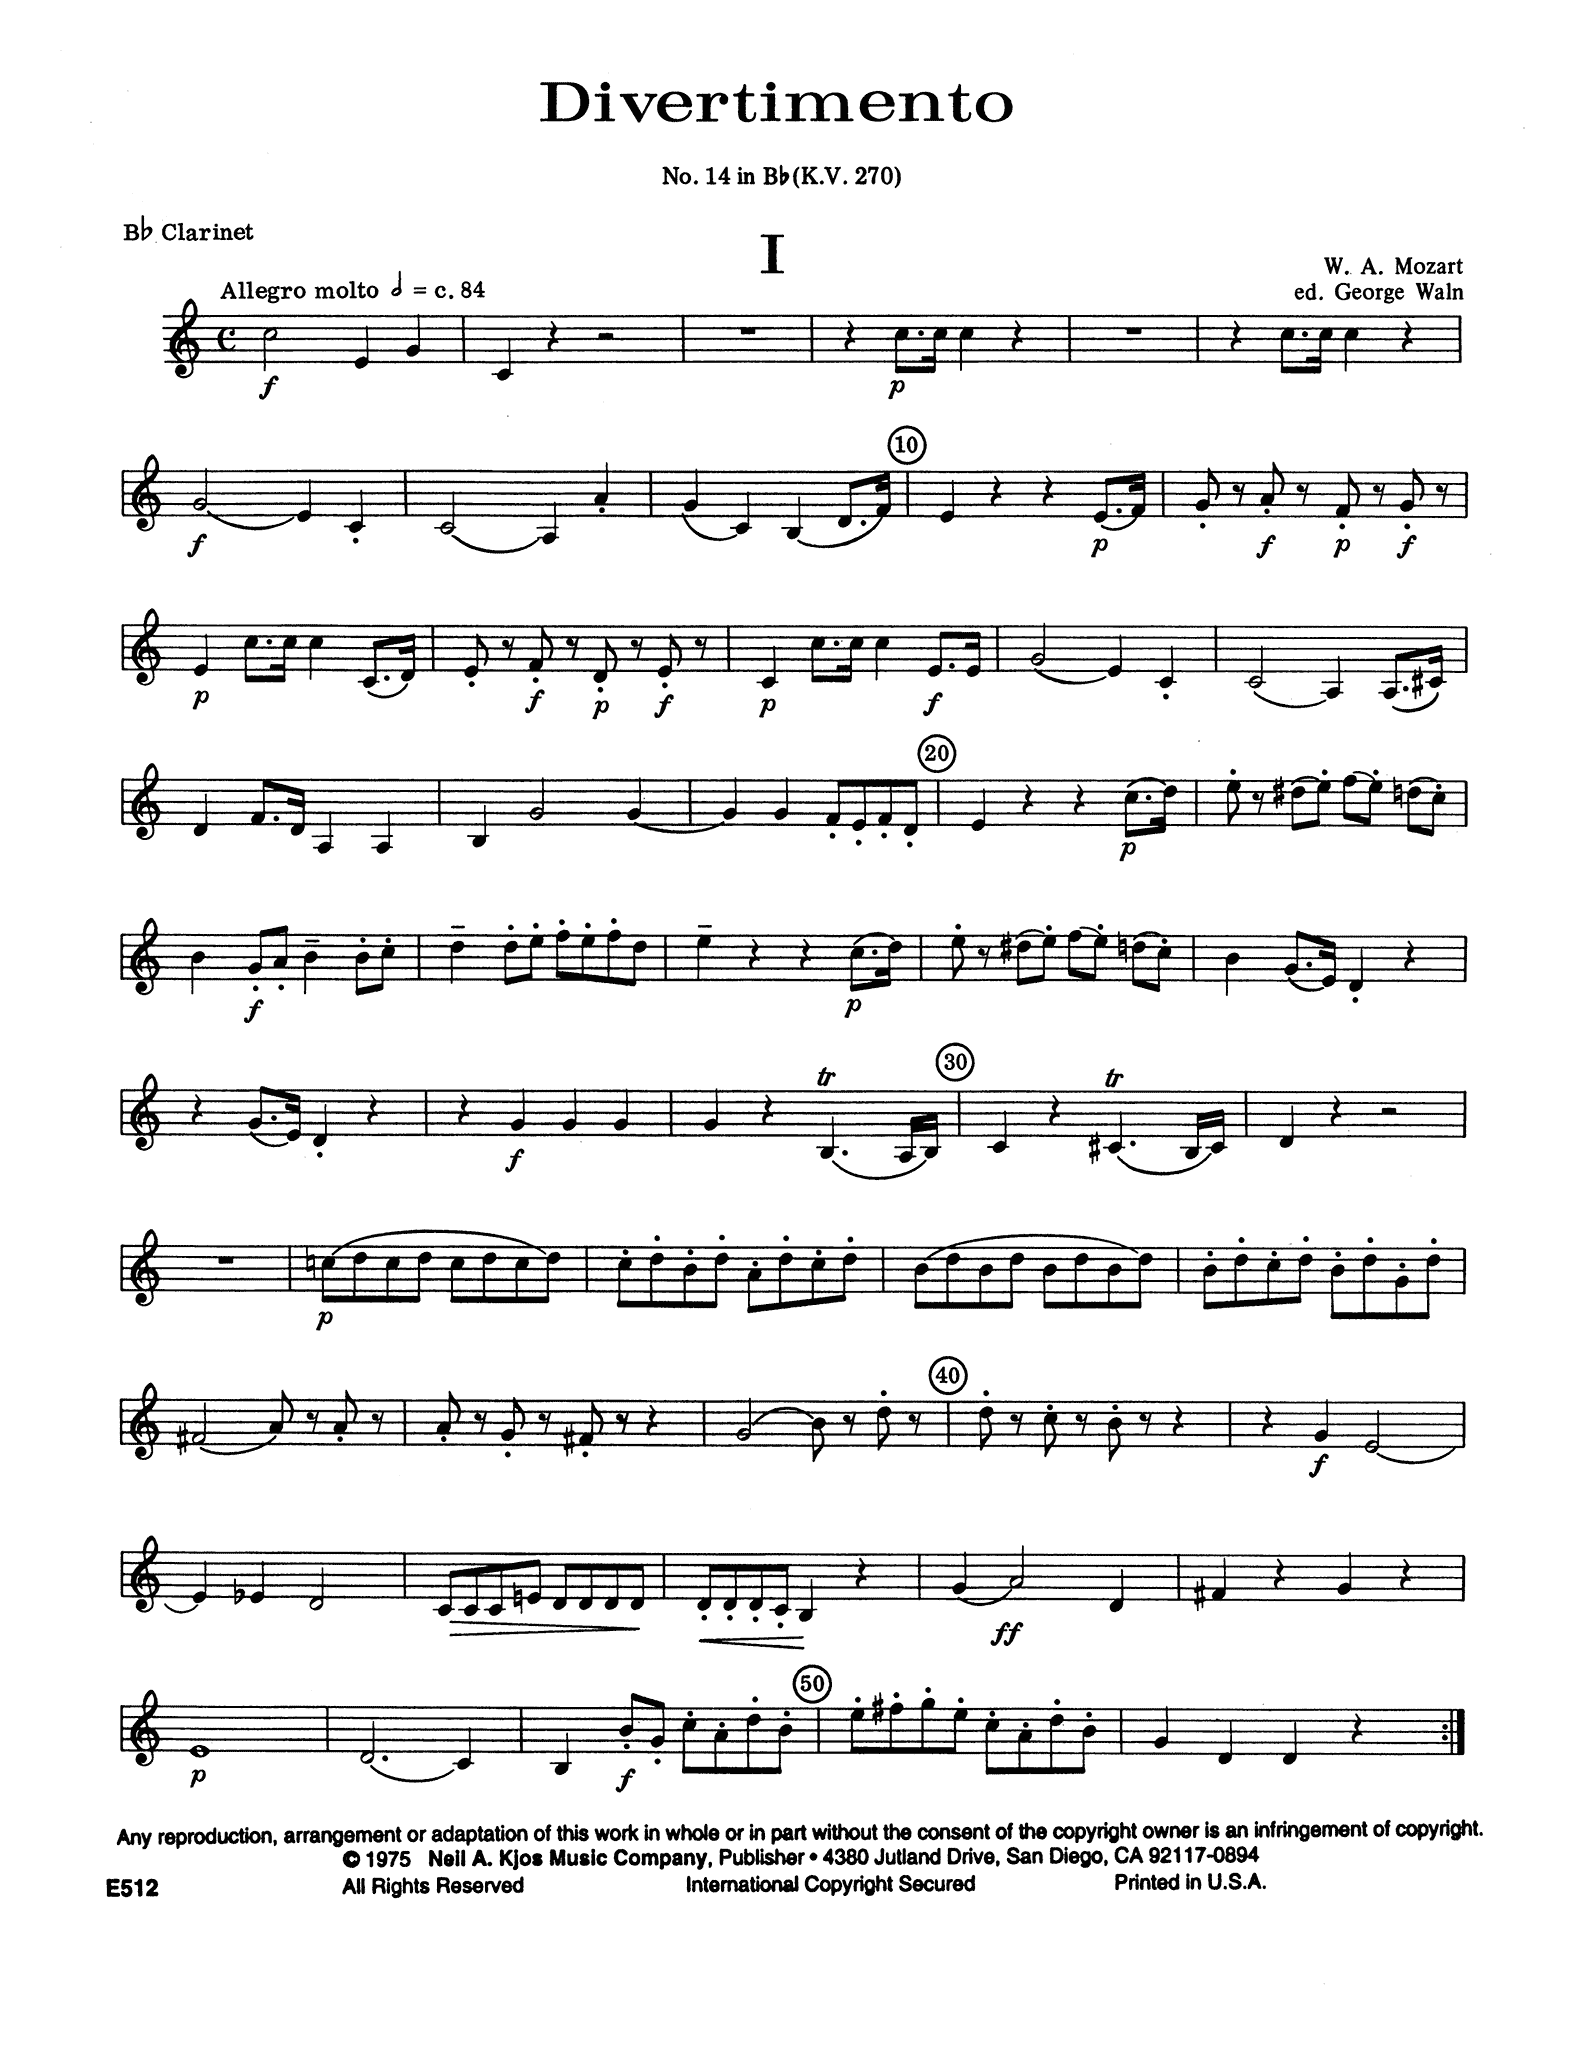 Mozart Divertimento No. 14, K. 270 wind quintet arrangement clarinet part